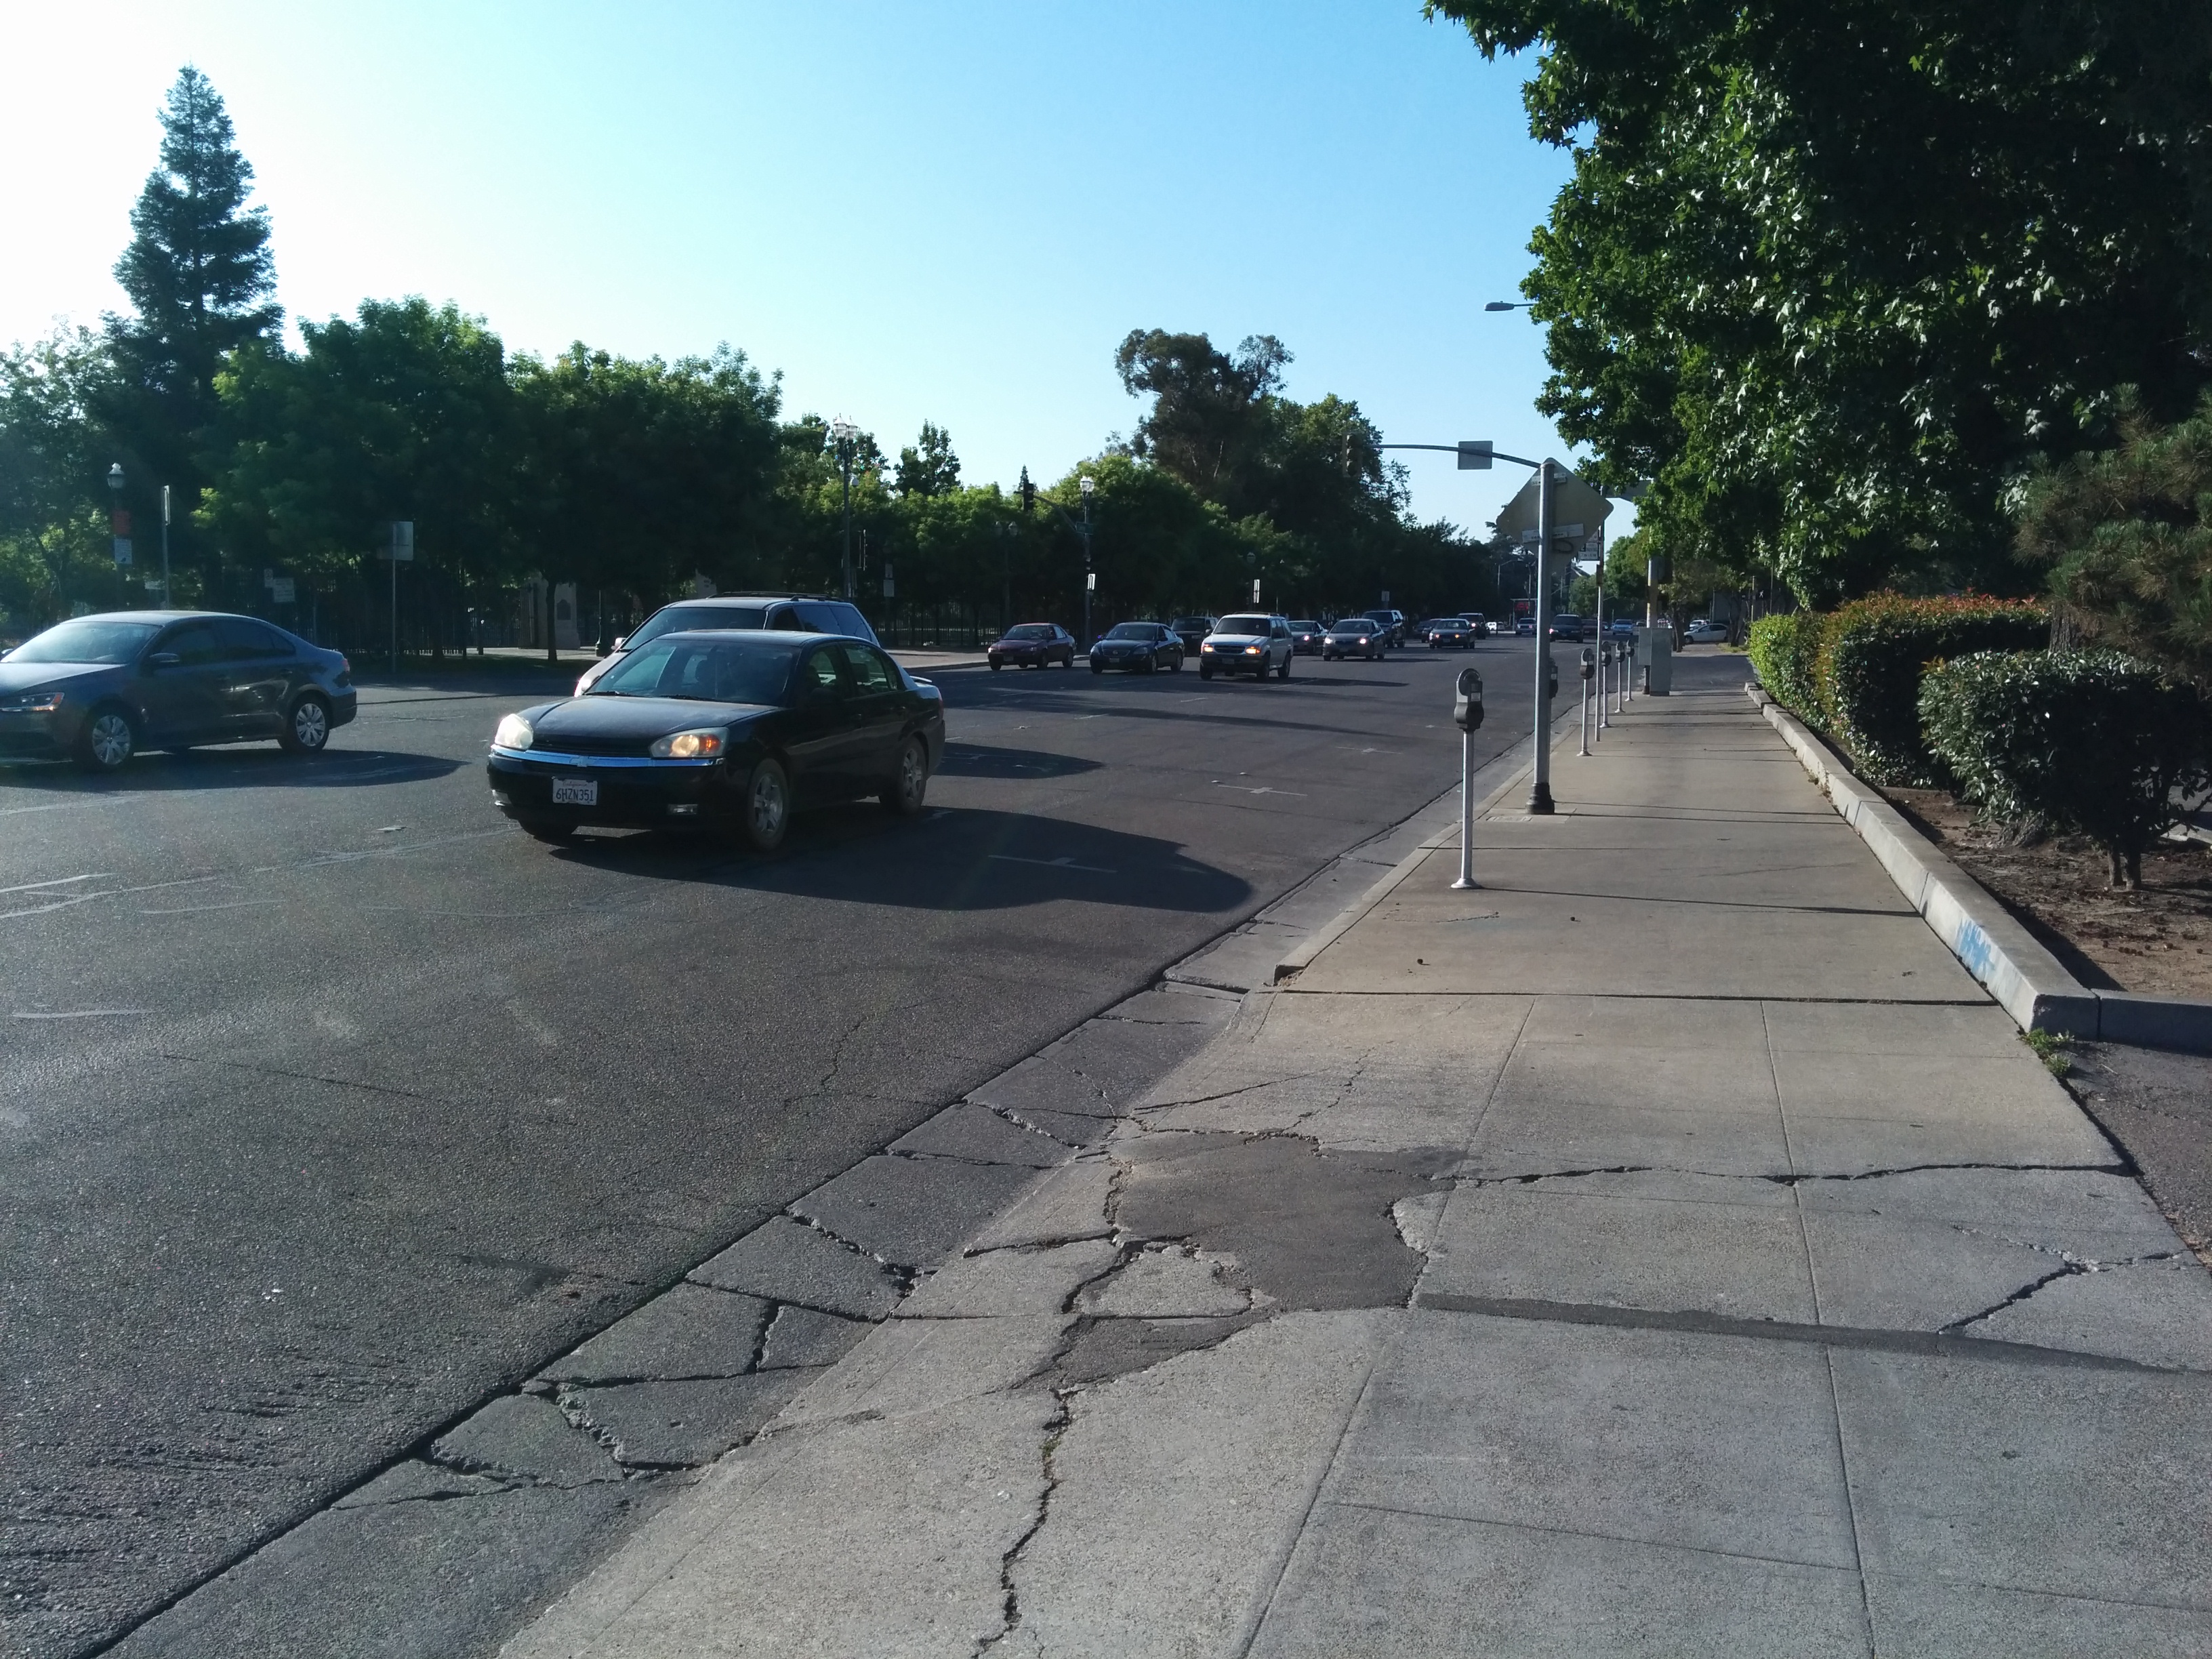 The five worst streets in Stockton | Stockton City Limits